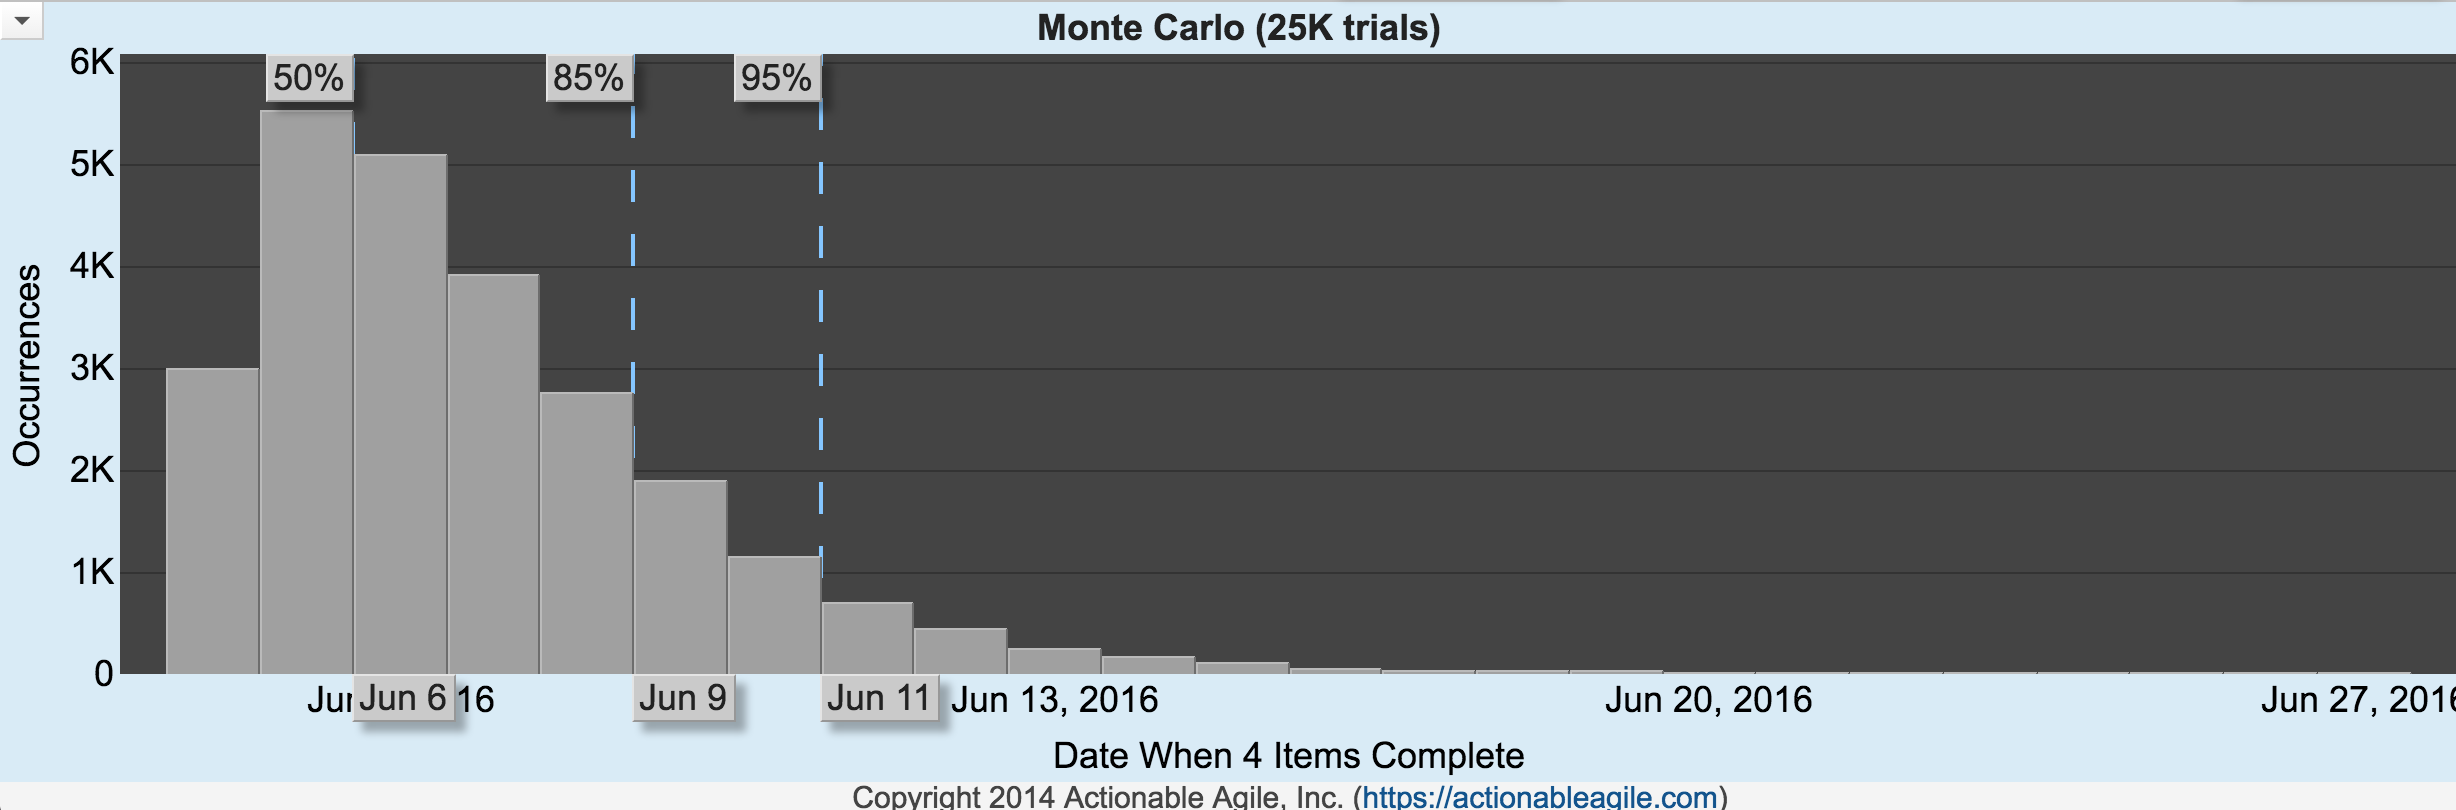 Monte Carlo Forecast